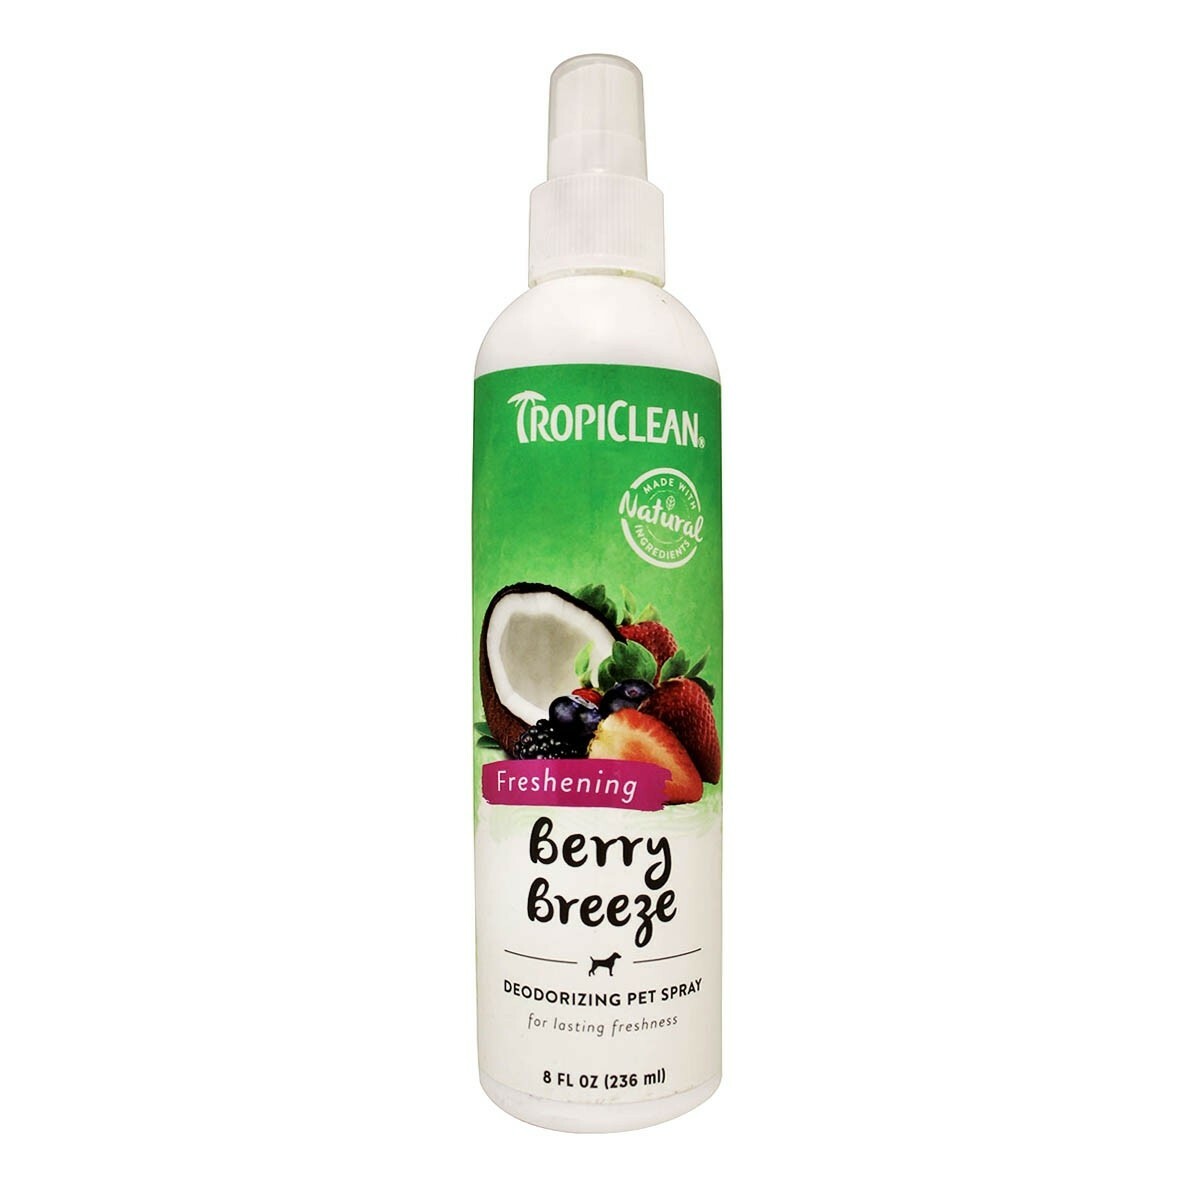 TropiClean Berry Breeze Deodorizing Pet Spray